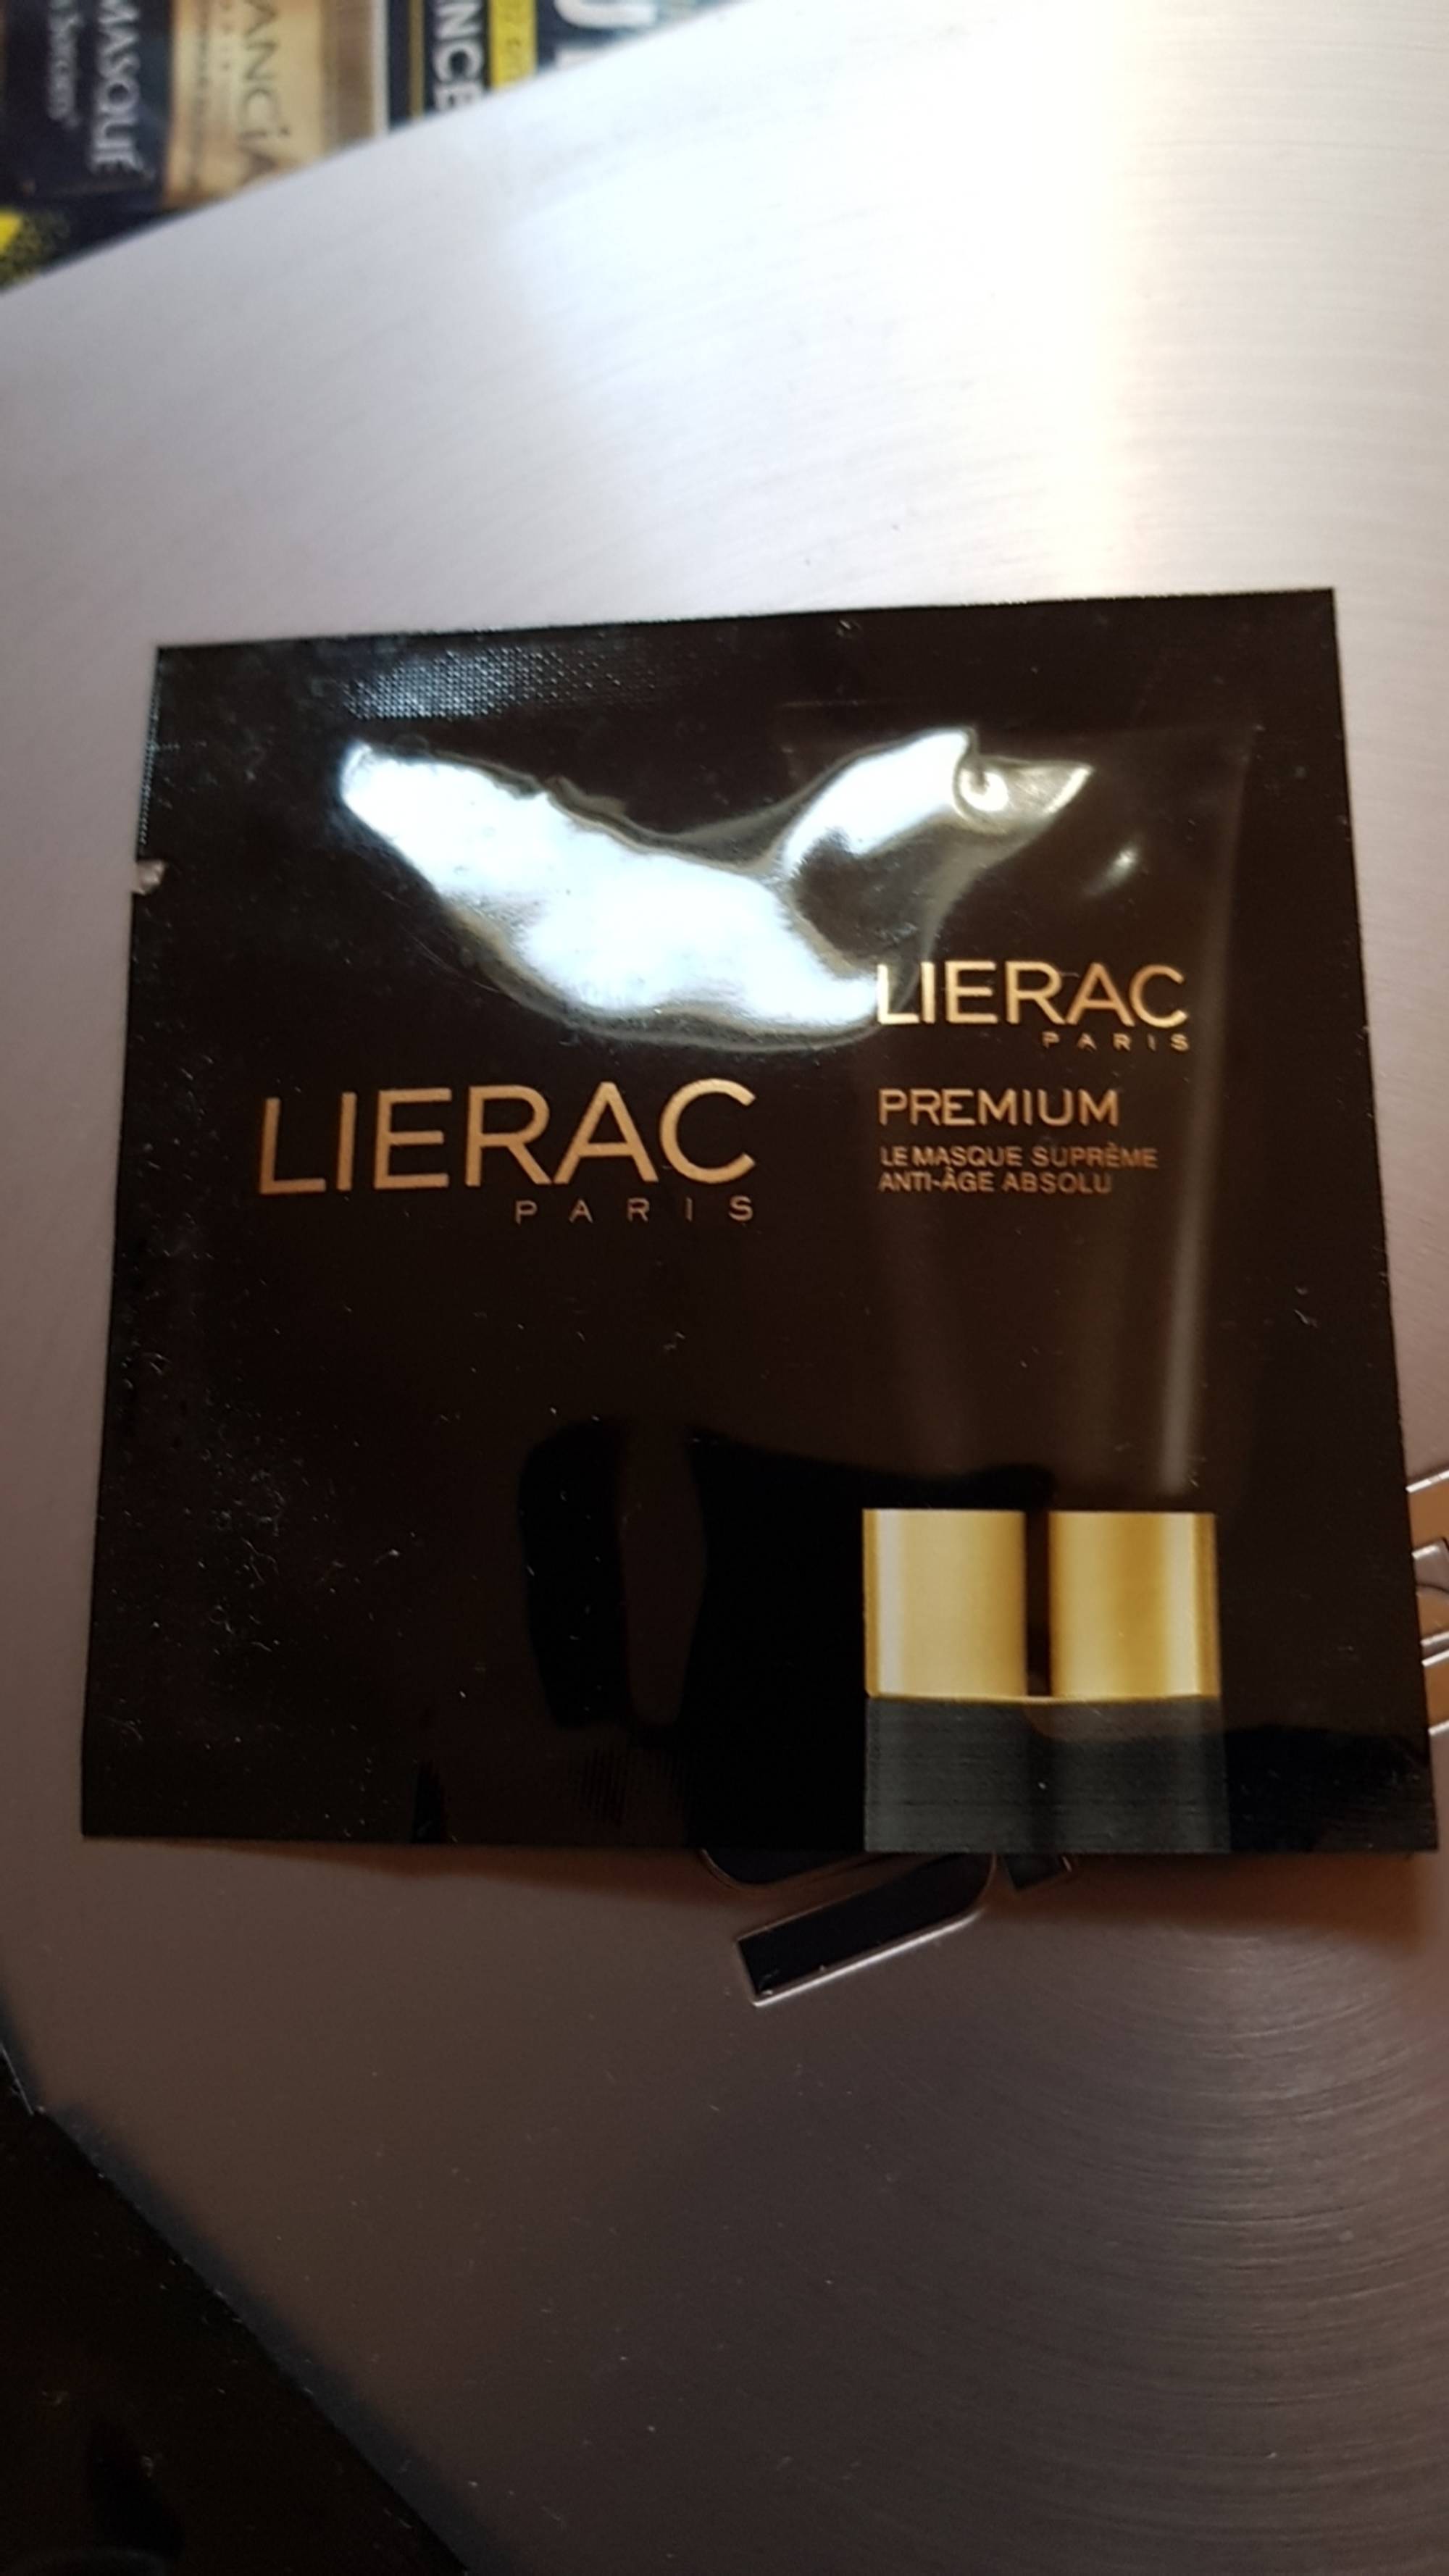 LIÉRAC - Premium - Le masque suprême anti-âge absolu